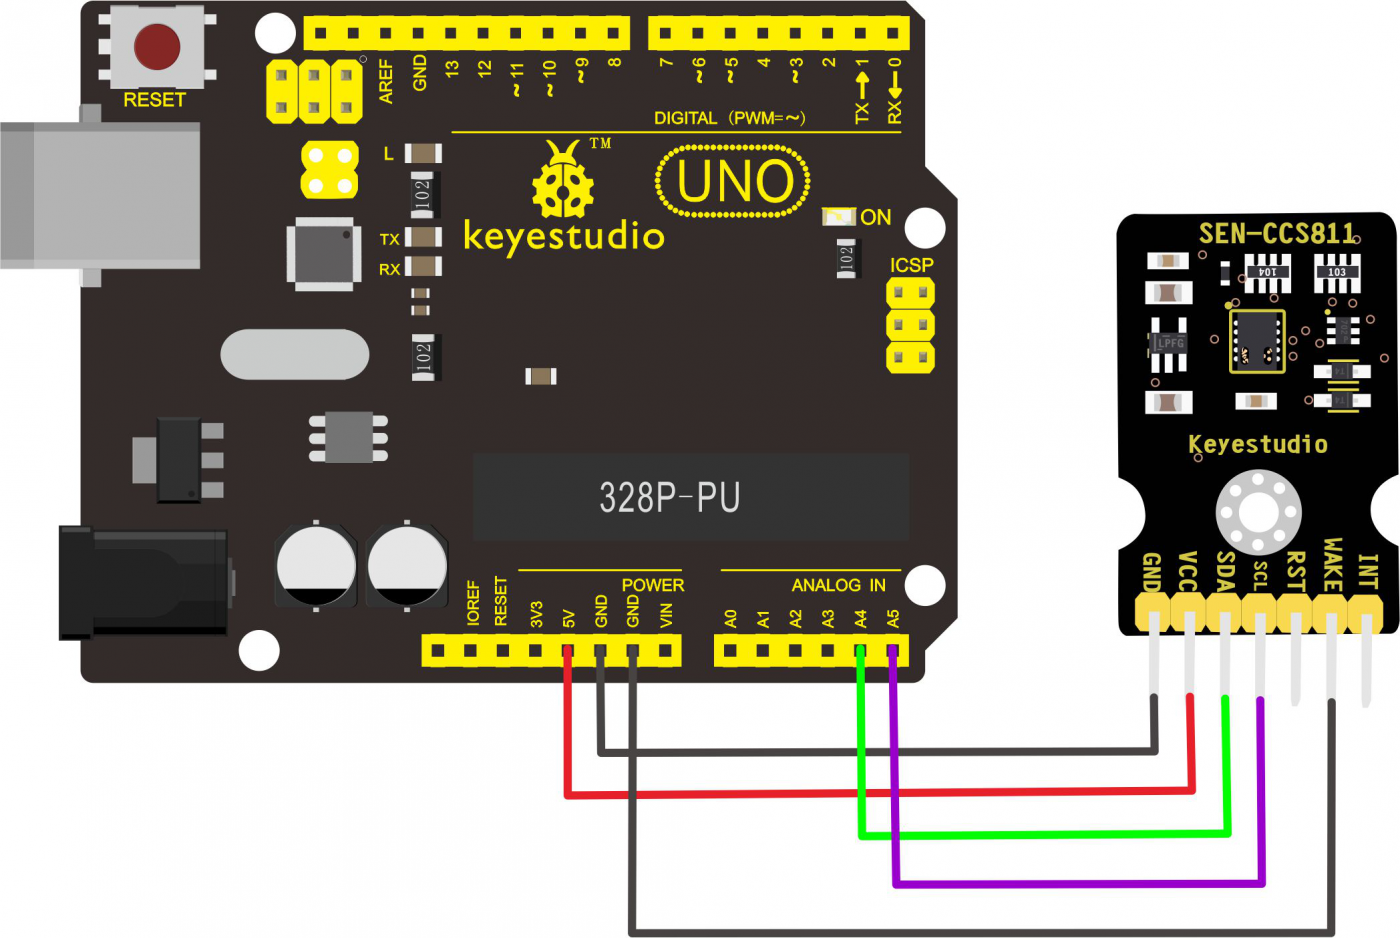 Building A Web Service For A CO2 Sensor With A Raspberry Pi